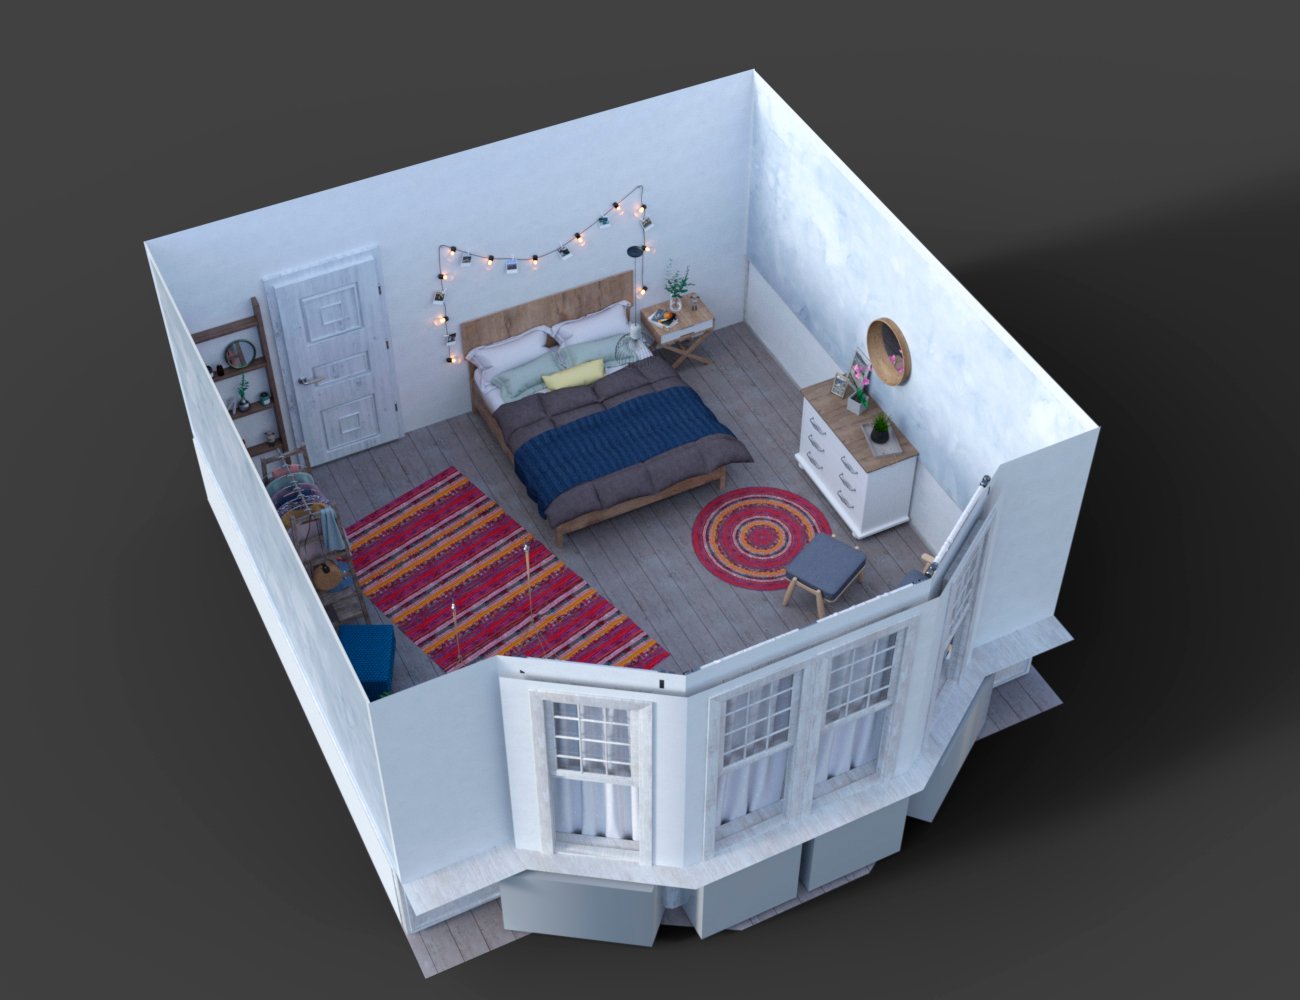 Summer Mood Bedroom by: Dimidrol, 3D Models by Daz 3D